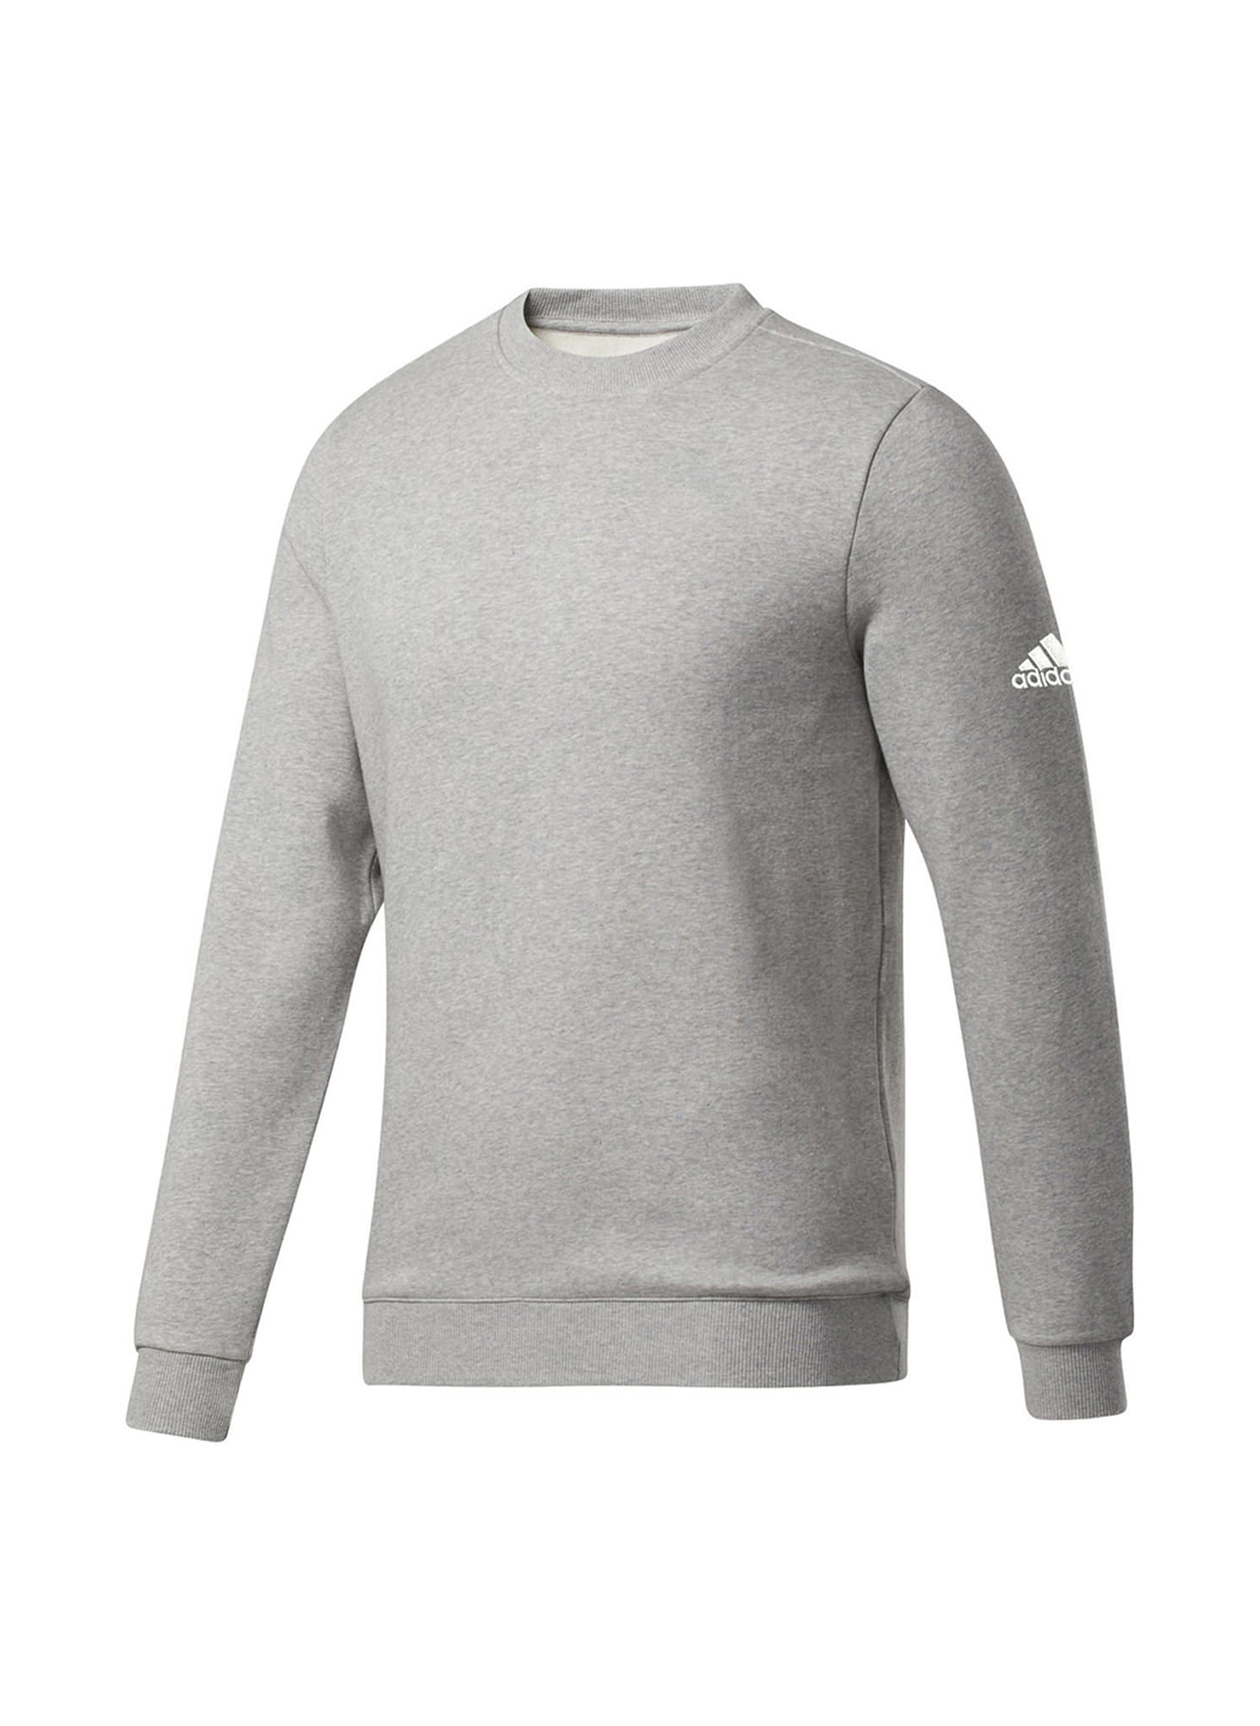 Grey / White Crew Sweatshirt Men's | Adidas